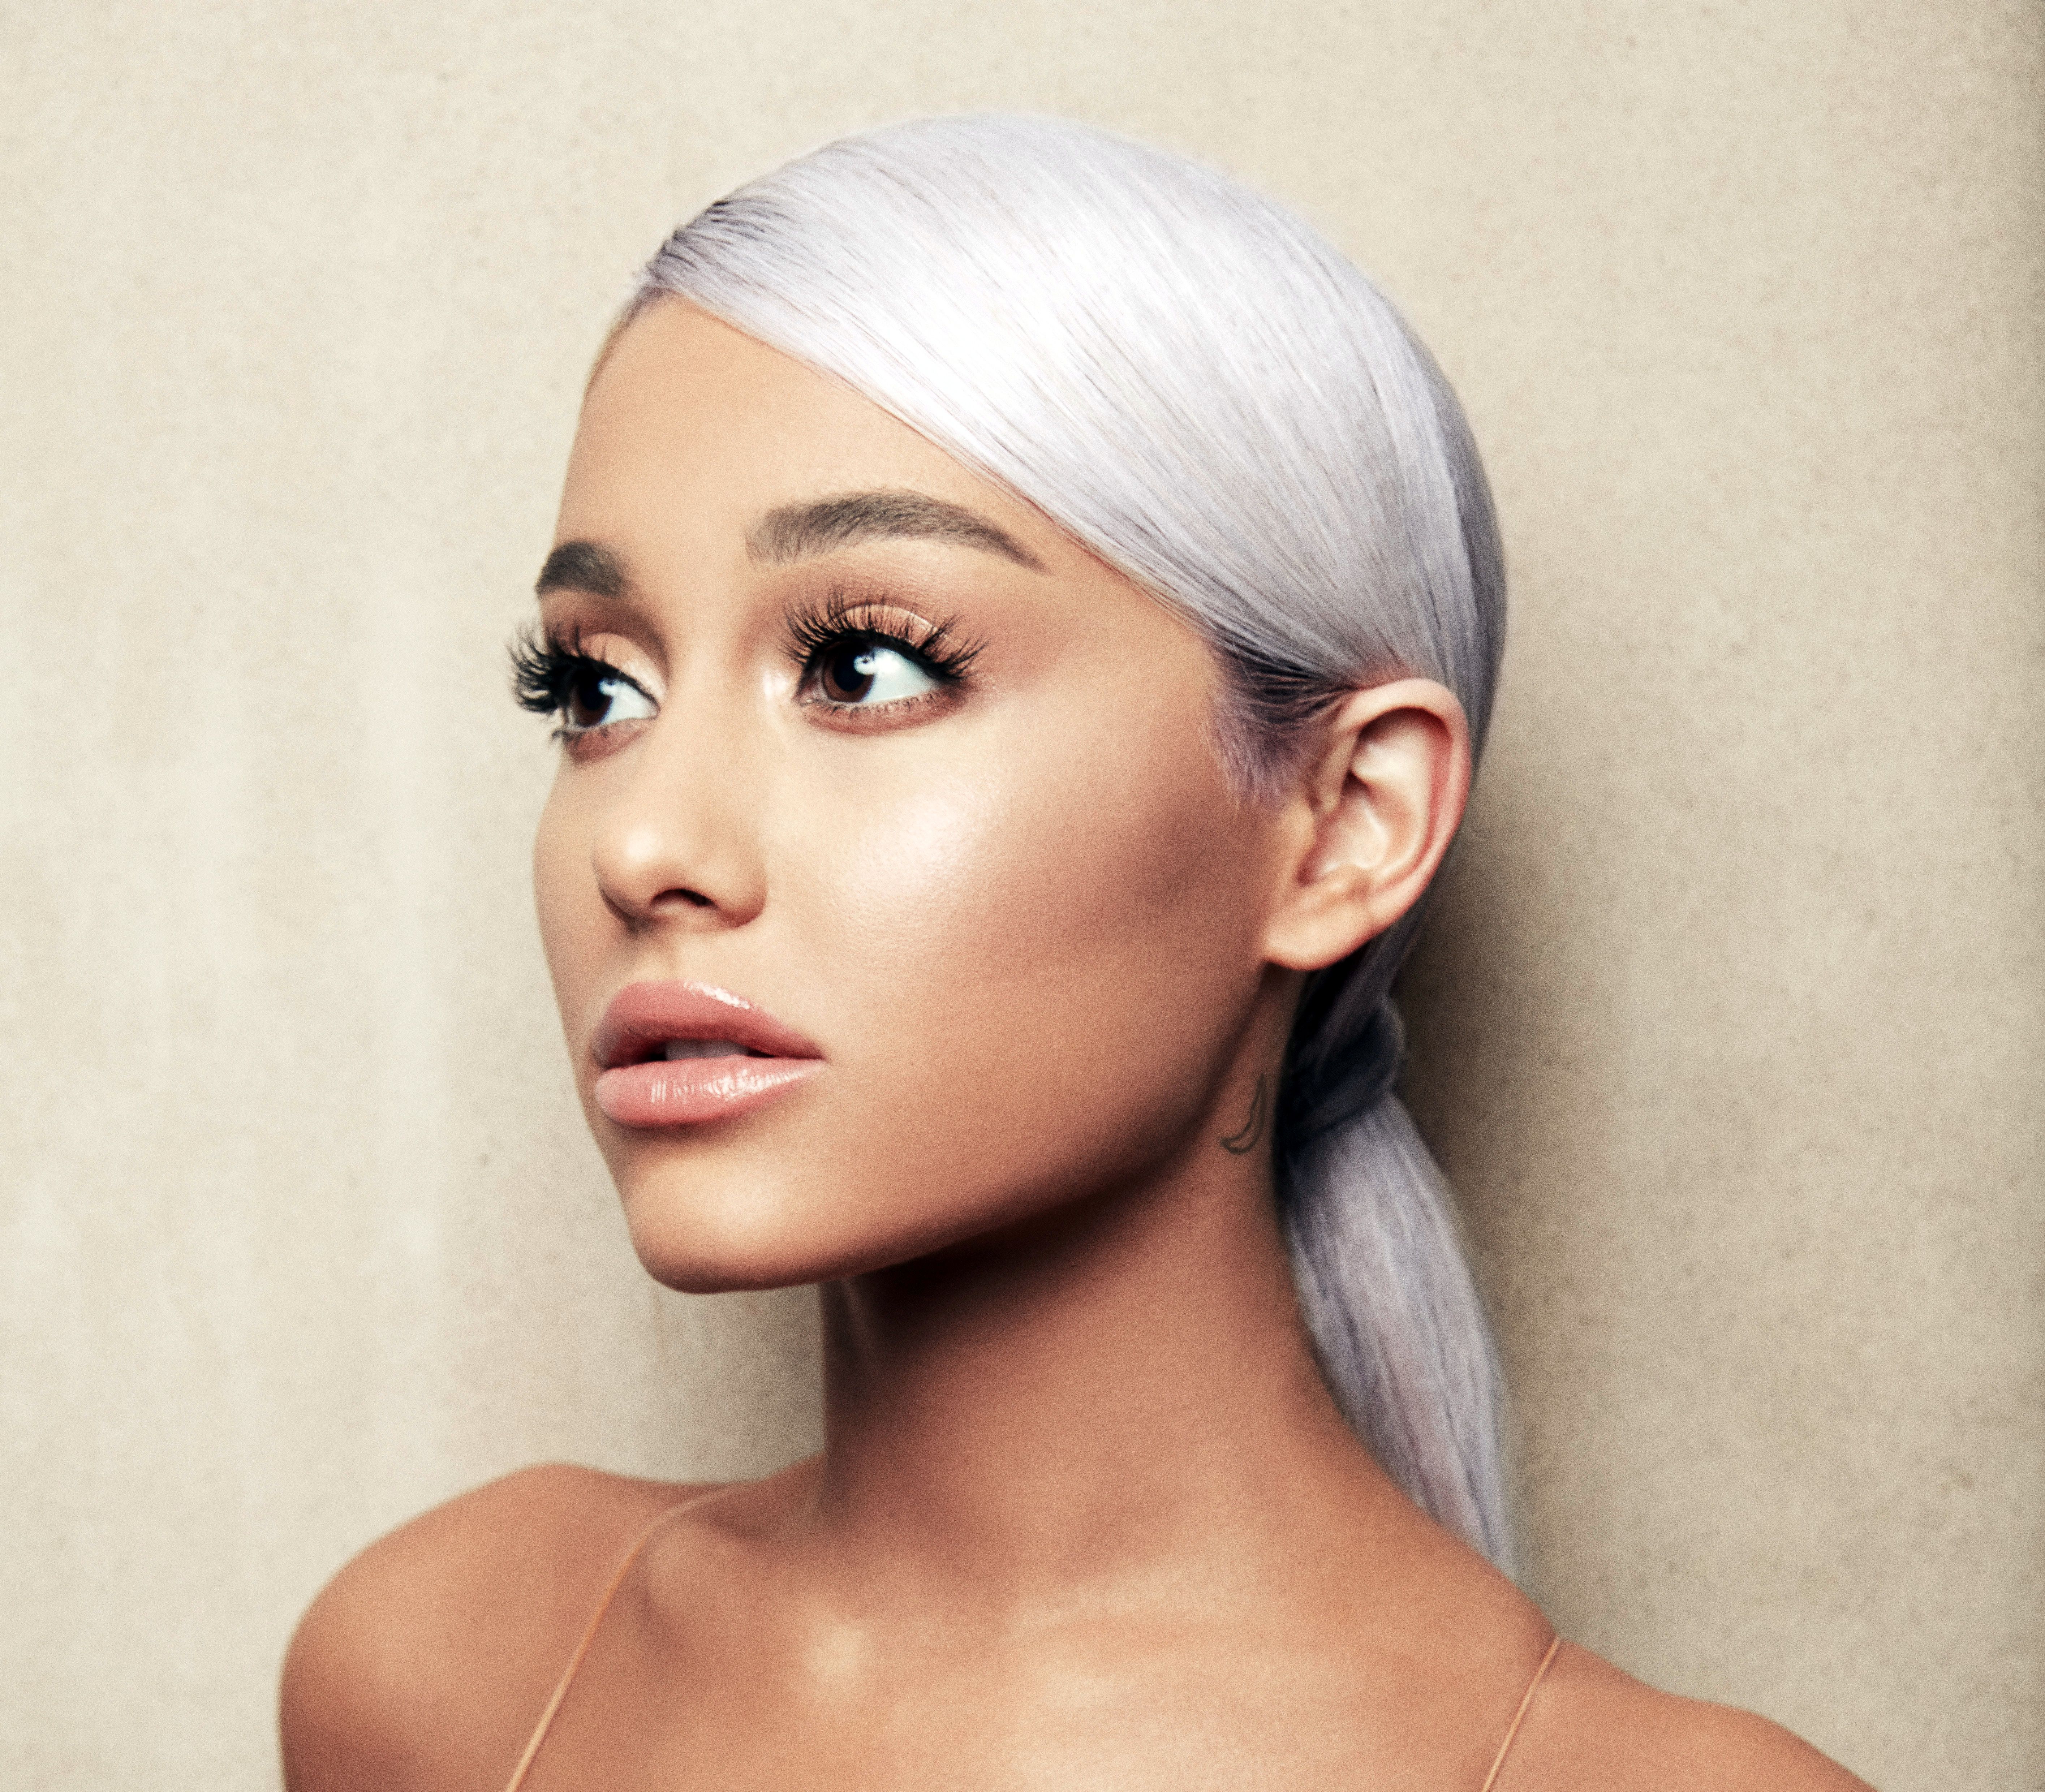 Ariana Grande Sweetener album photohoot 4k Ultra HD Wallpaper